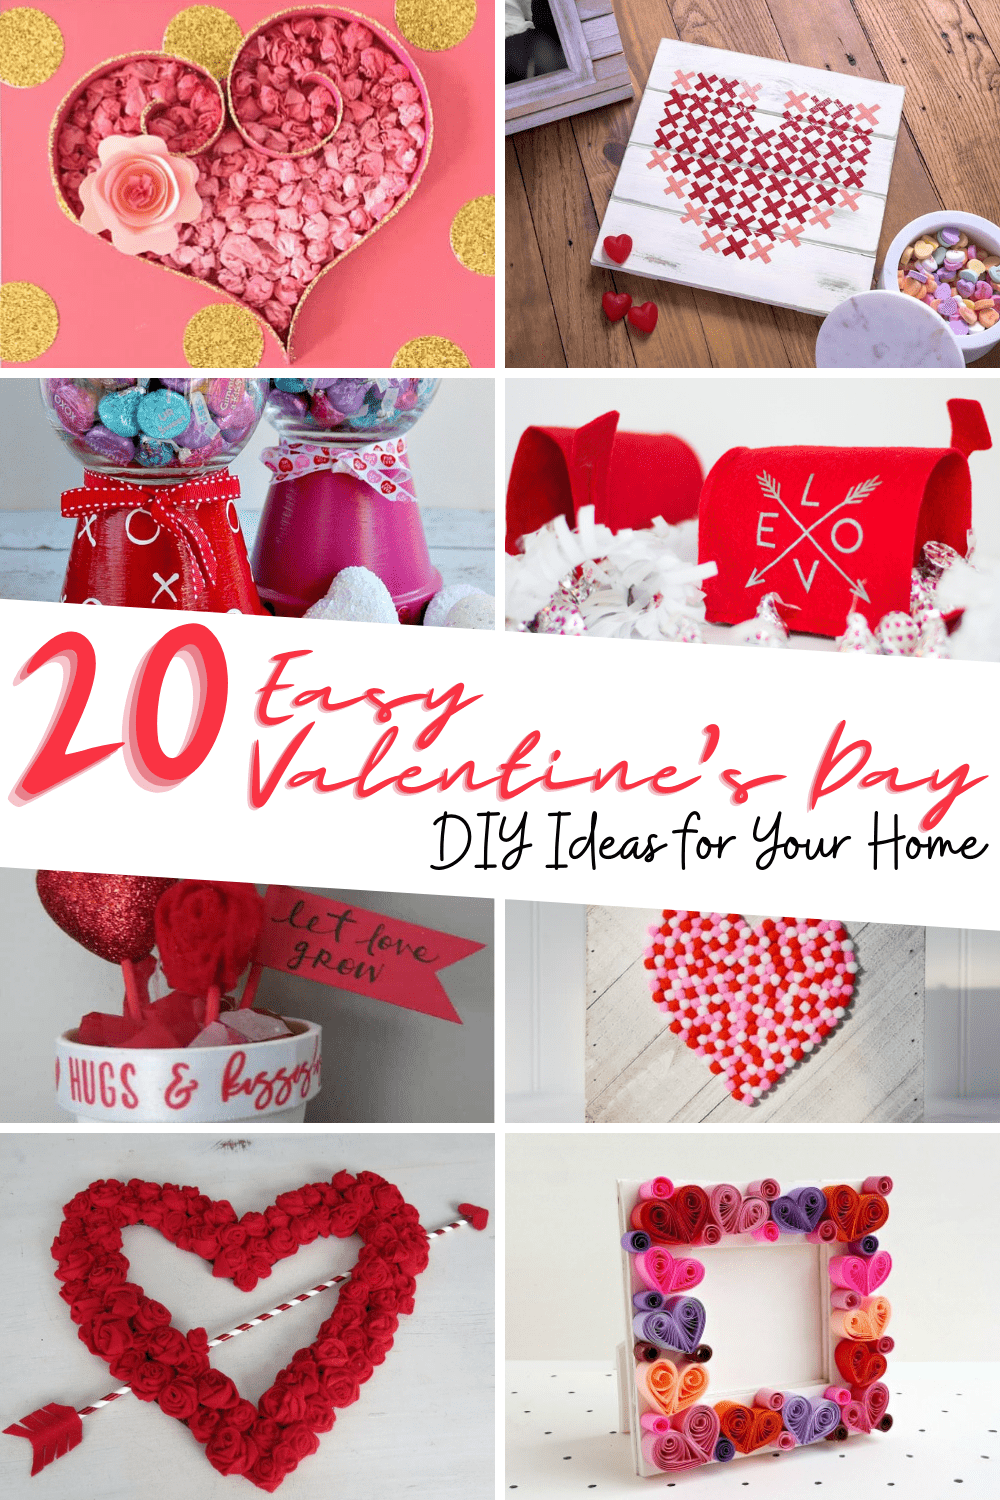 New Styles Of Hearts Decor Valentine Day Tree's Arrangements Ideas